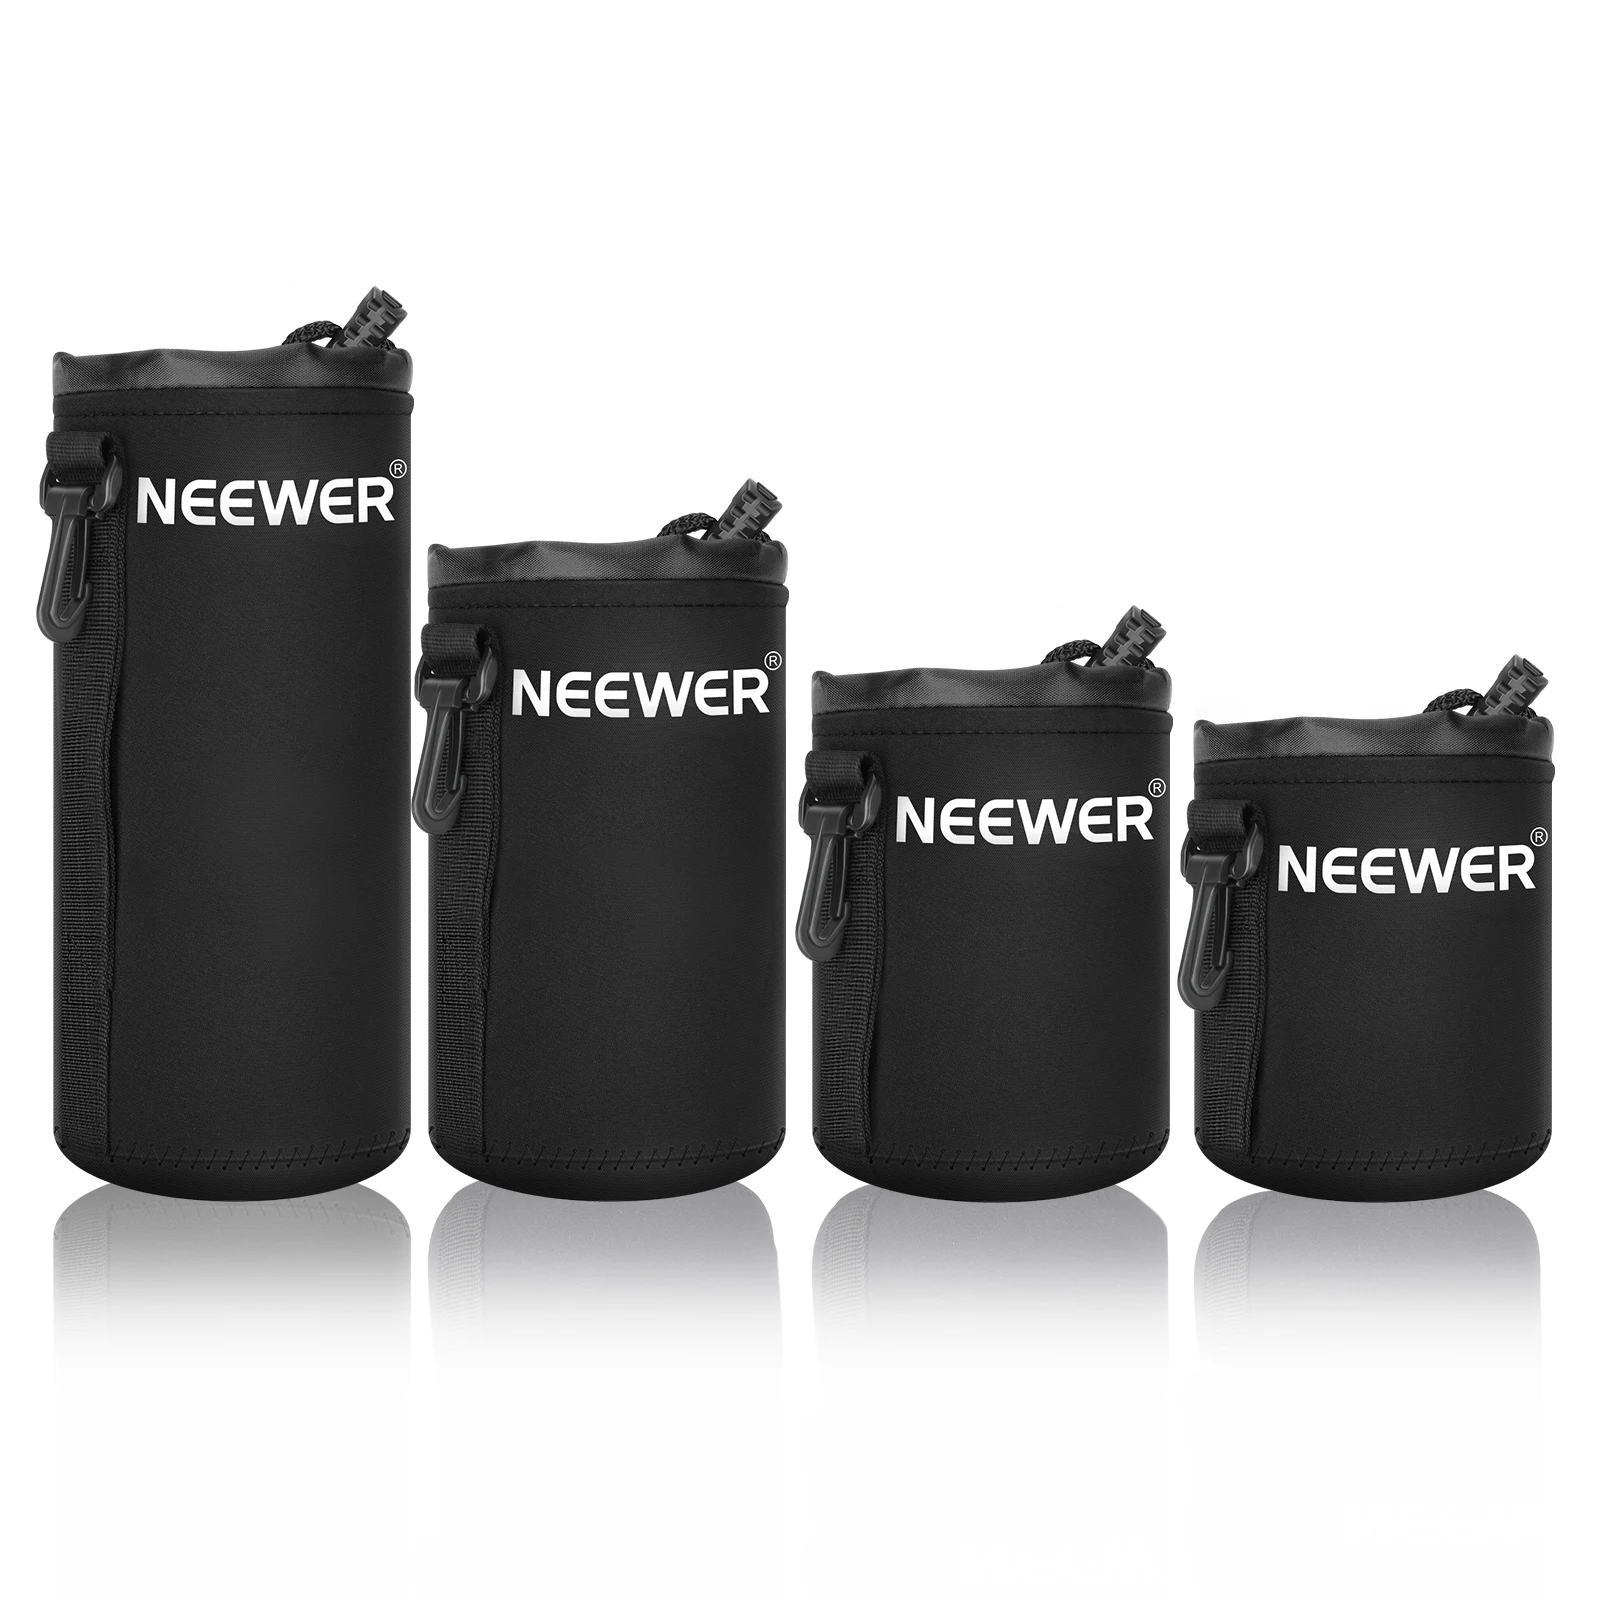 Neewer 4 размера DSLR камера сумка для объектива на шнурке Чехол Размер S M L XL